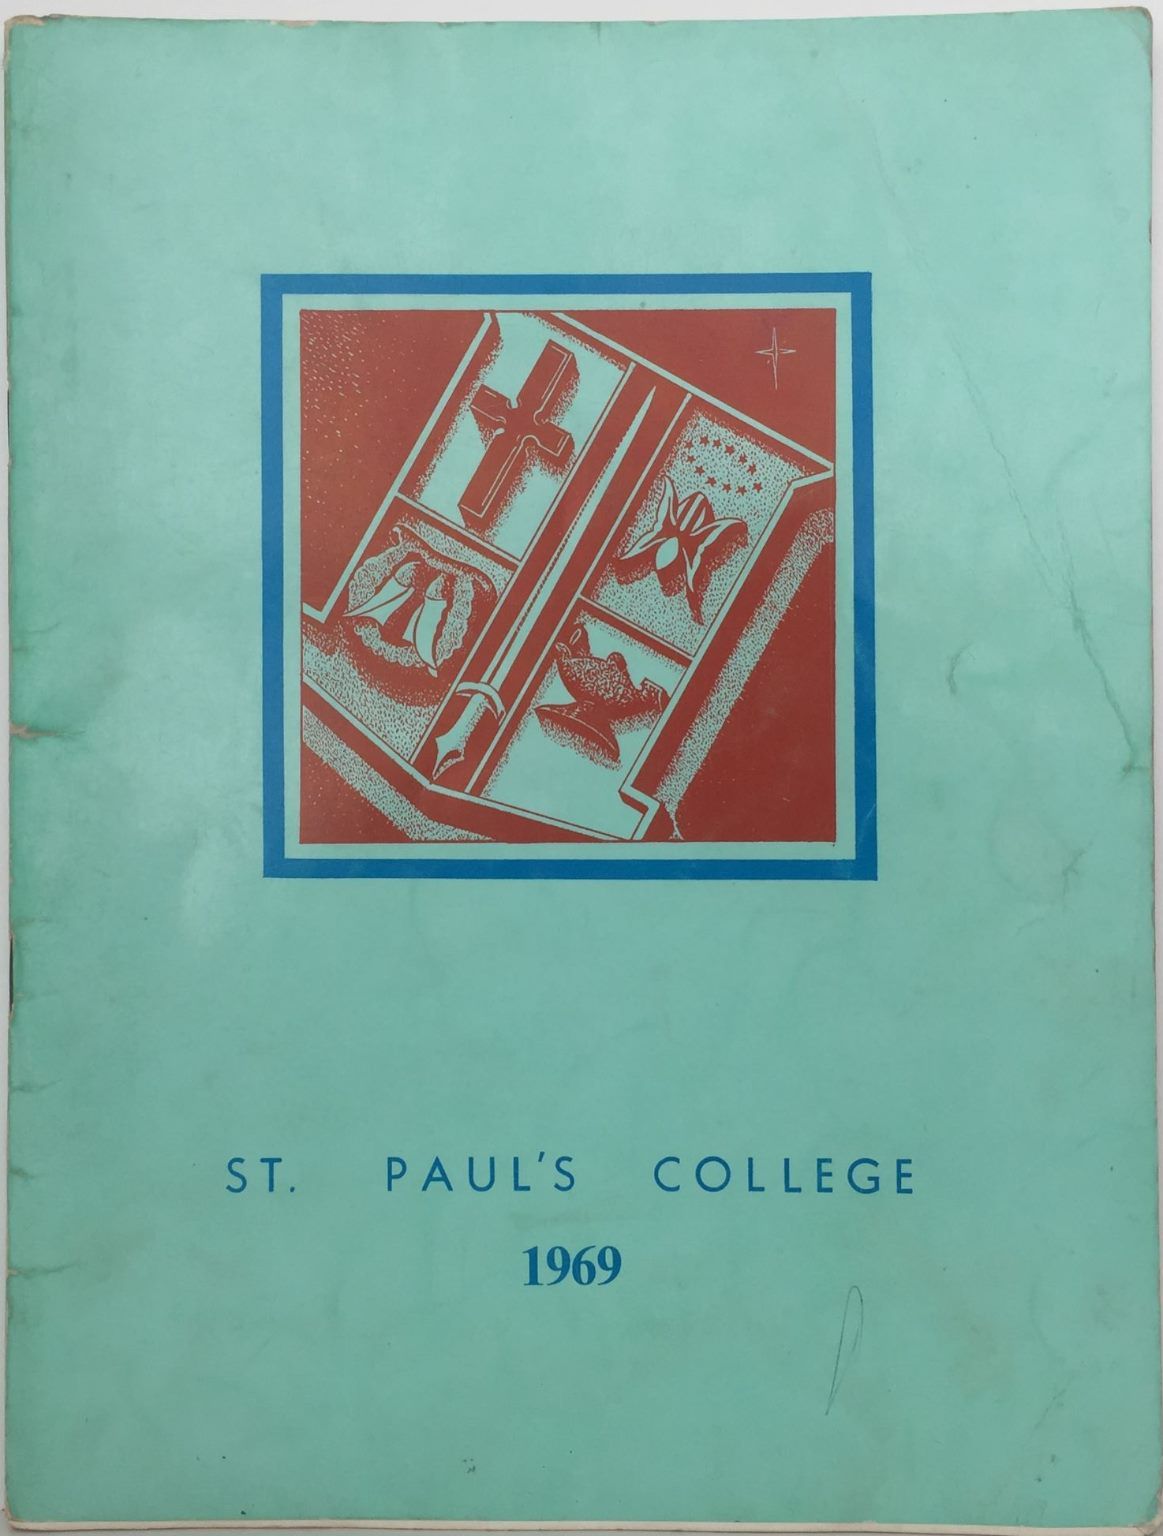 St. Paul's College 1969